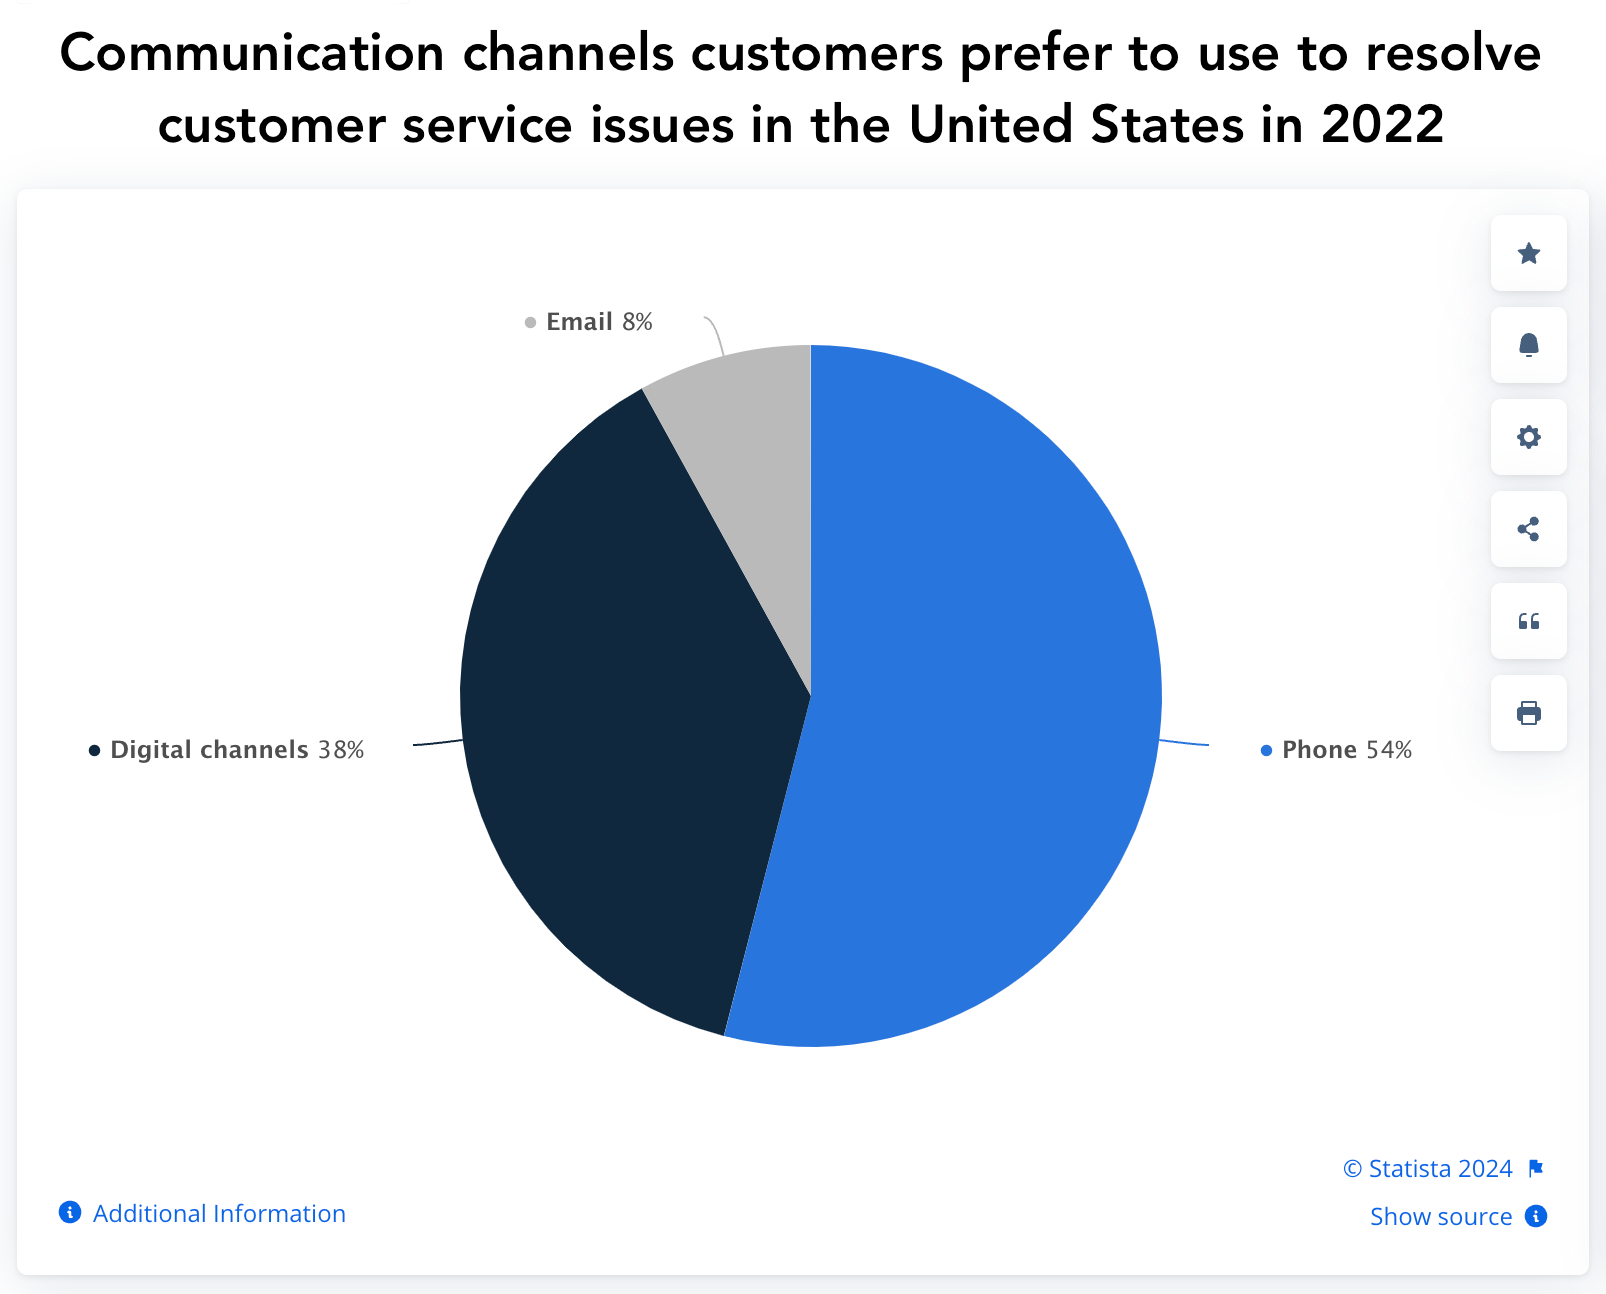 Diagram lingkaran Statista yang menunjukkan saluran komunikasi yang lebih disukai pelanggan untuk menyelesaikan masalah di Amerika Serikat pada tahun 2022 - telepon, saluran digital, email